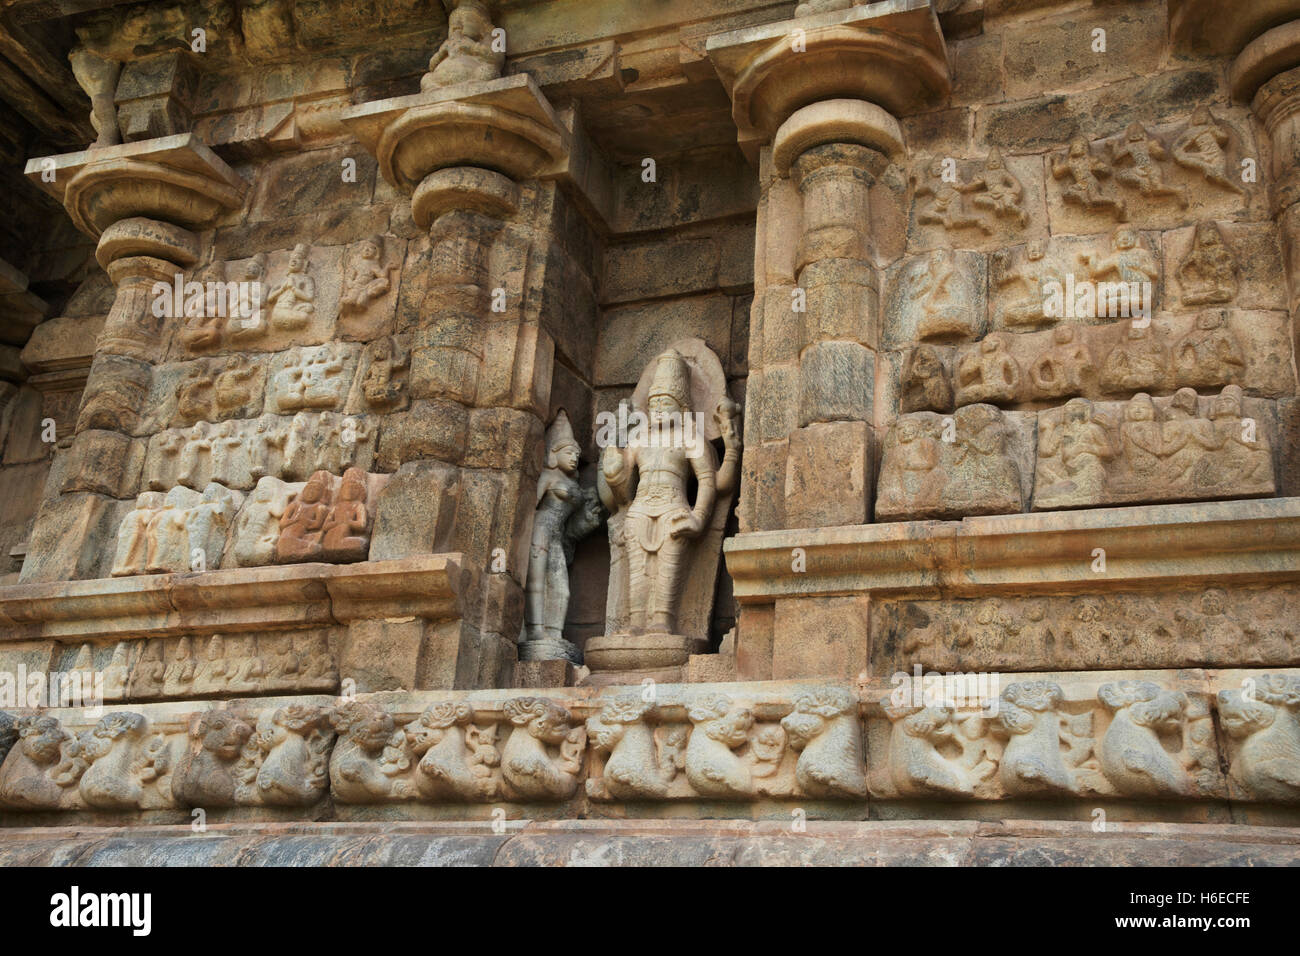 Vishnu con sus consortes, nicho en el muro occidental, el Templo Brihadisvara de Gangaikondacholapuram, Tamil Nadu, India. Foto de stock